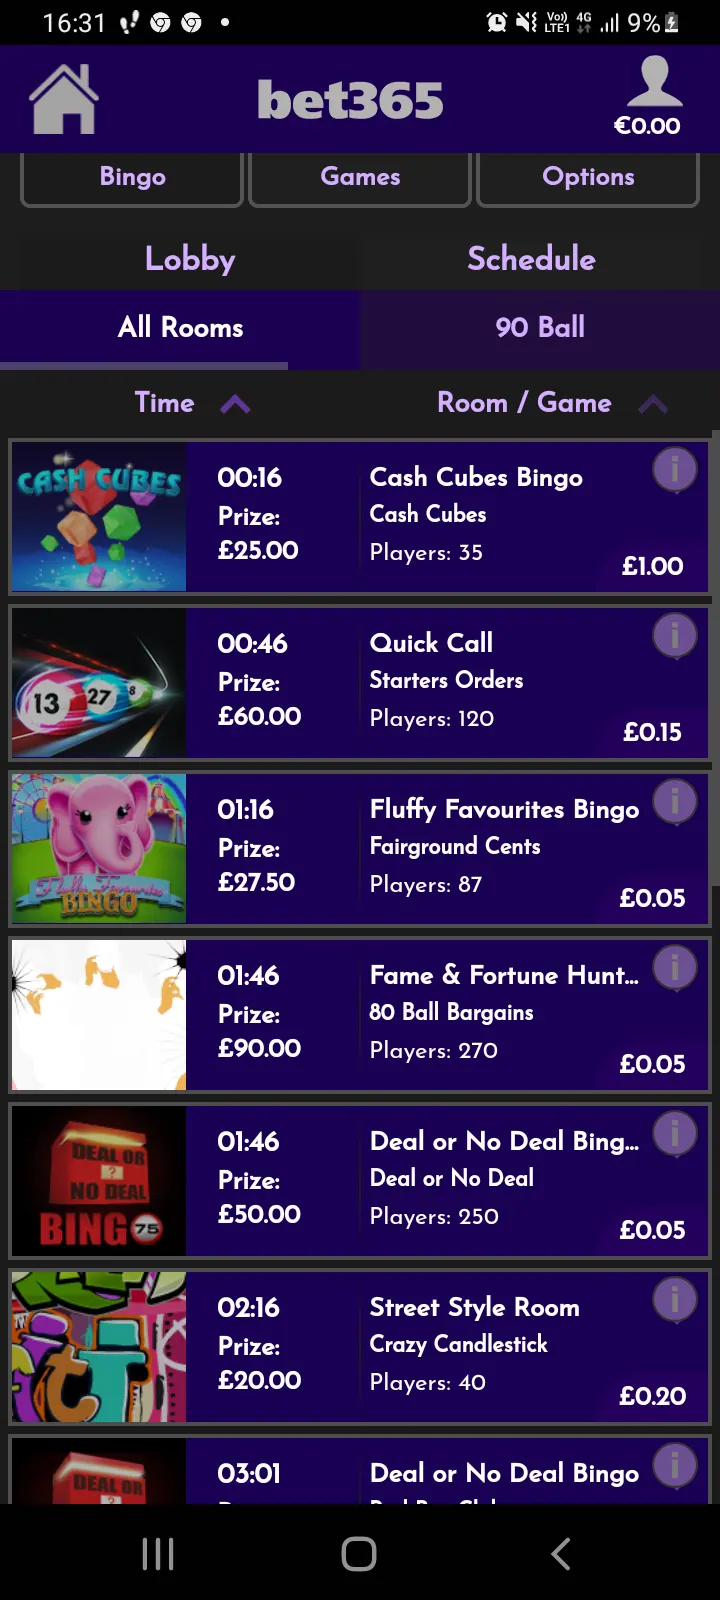 bet365 casino app screenshot 8